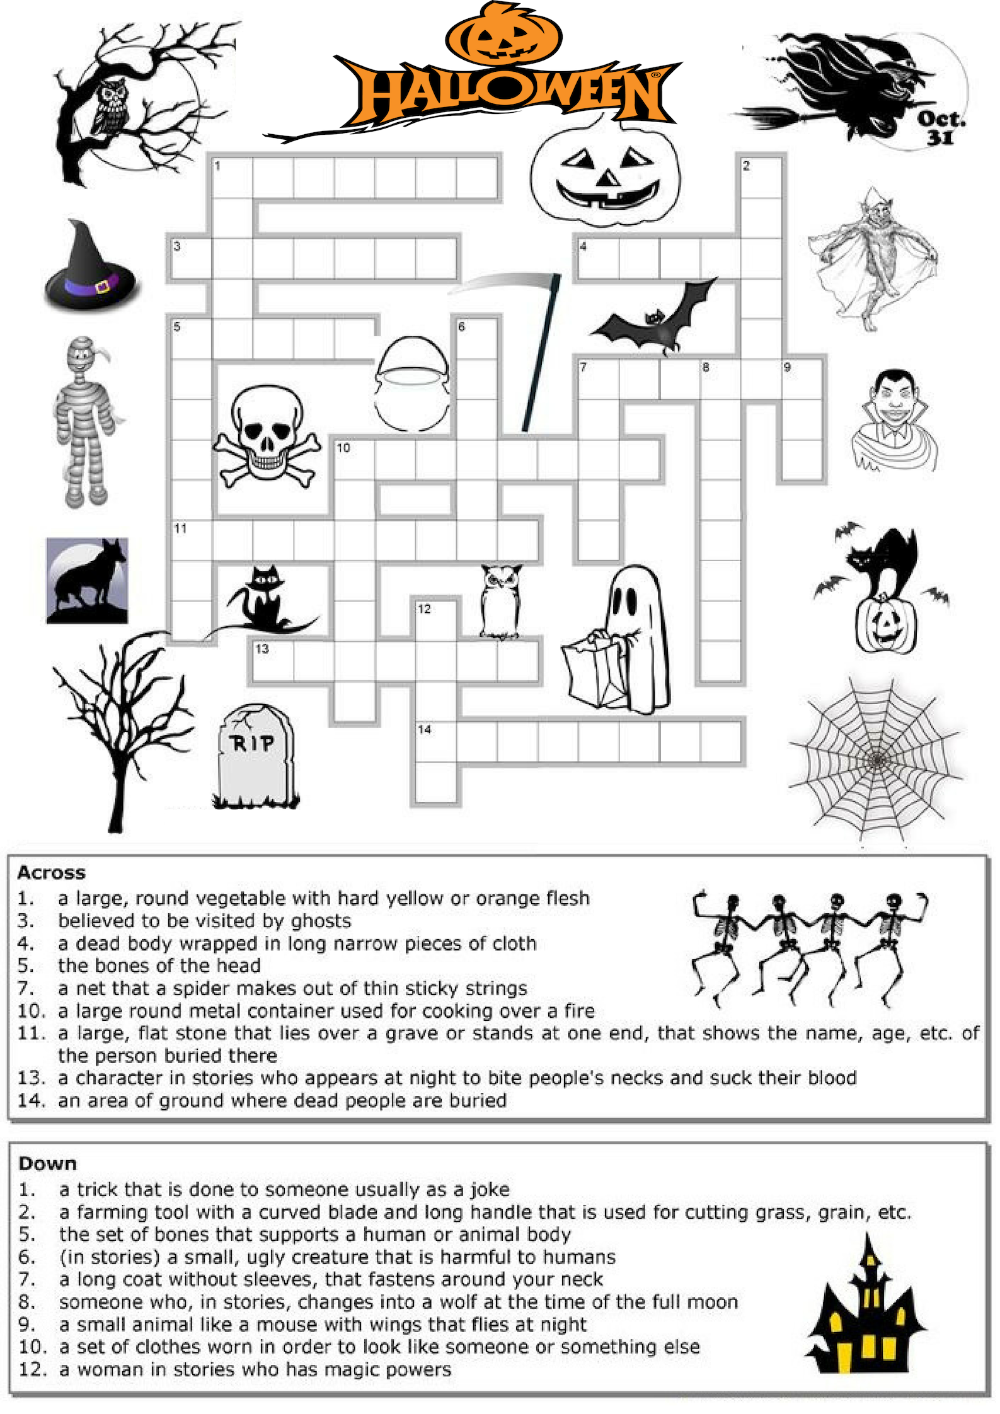 Printable Crossword Puzzles For Halloween